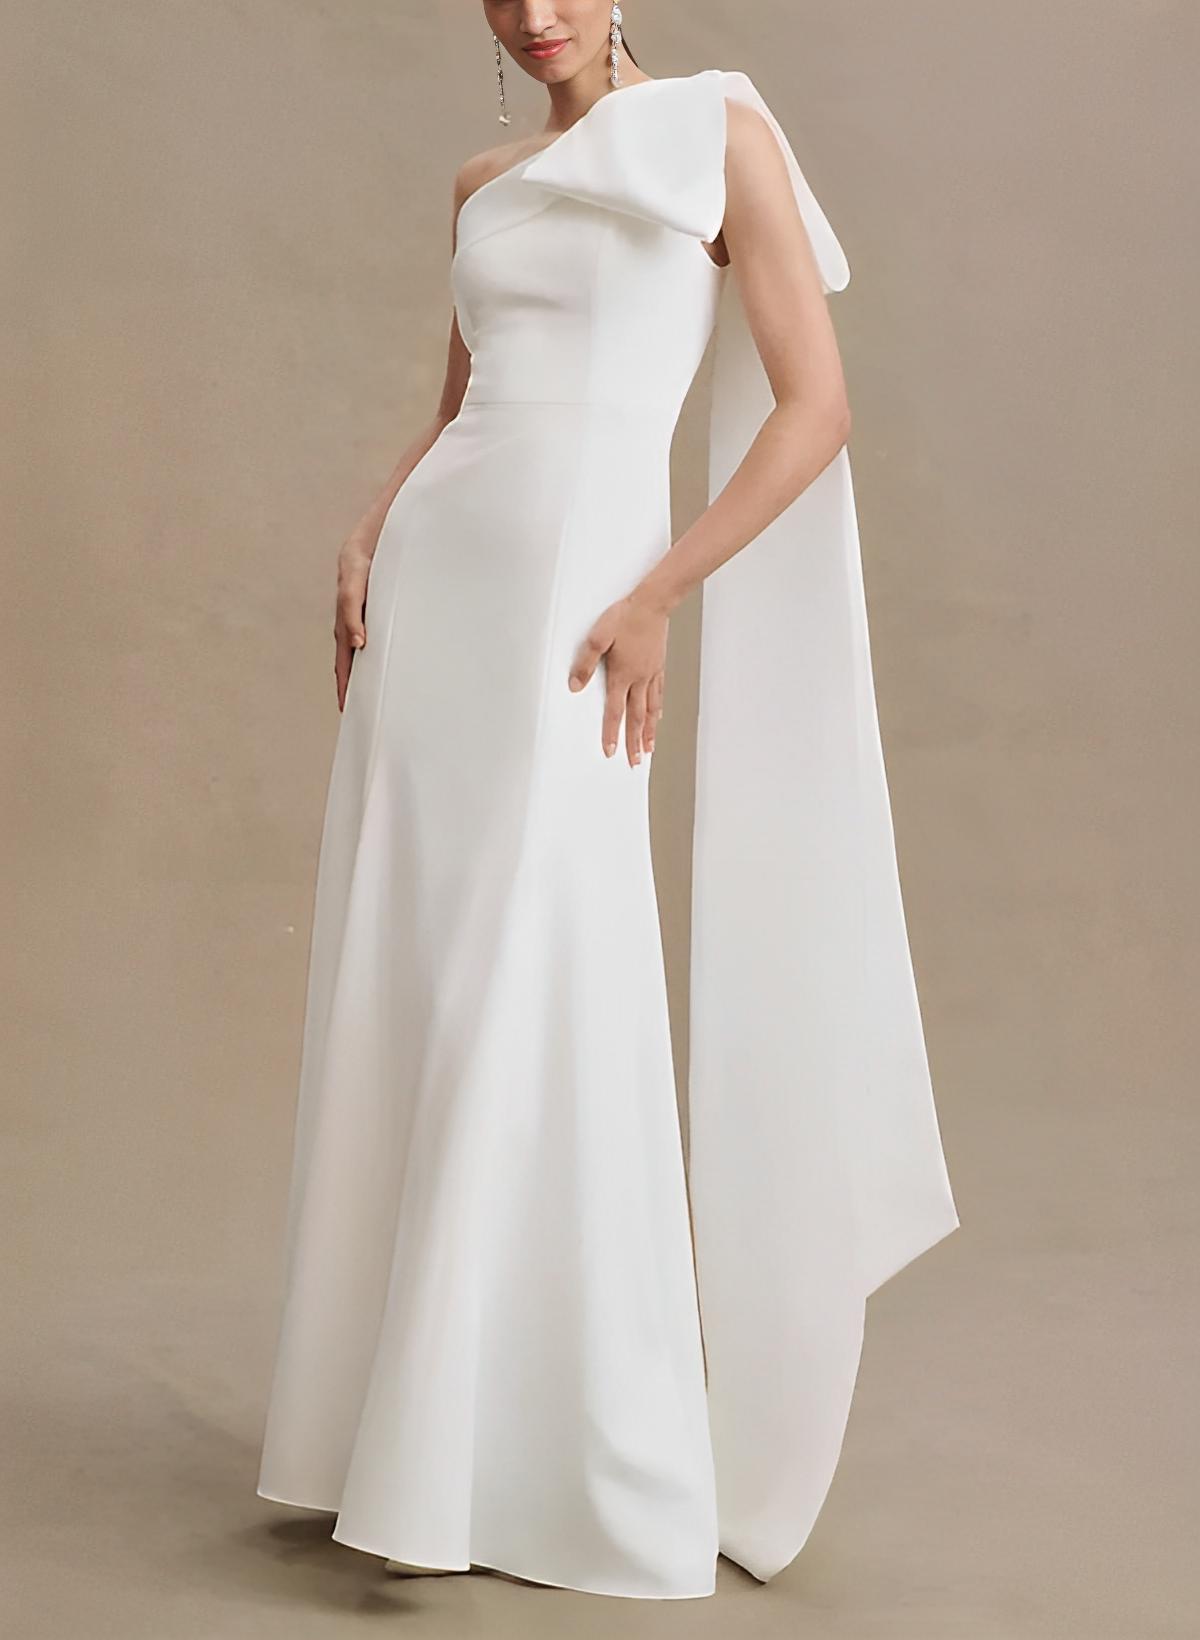 Sheath/Column One-Shoulder Sleeveless Satin Wedding Dresses With Sash